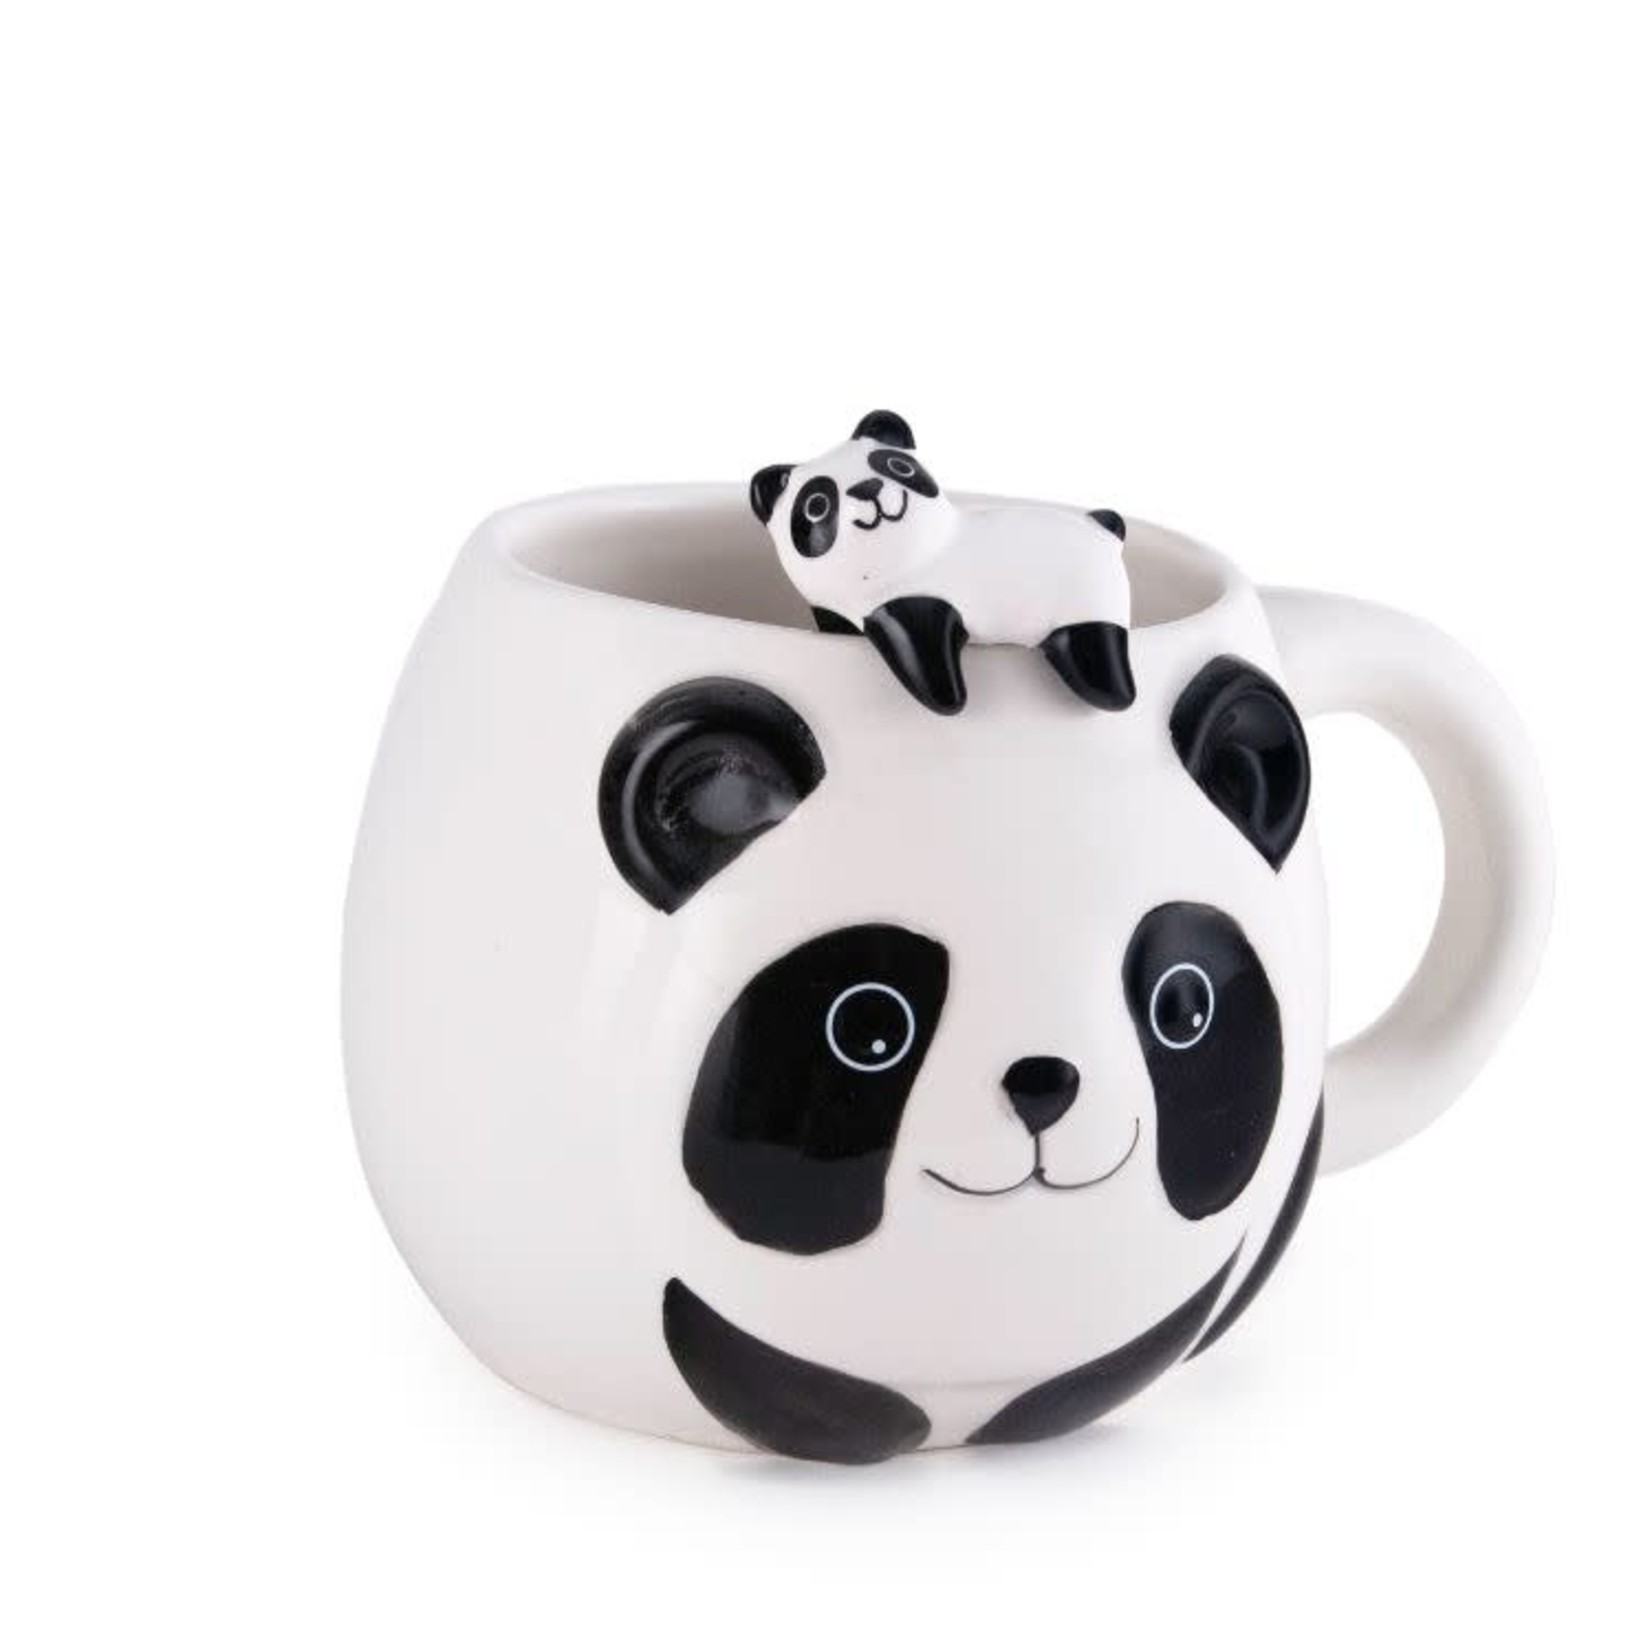 Mug - Panda with Spoon - NS2-P